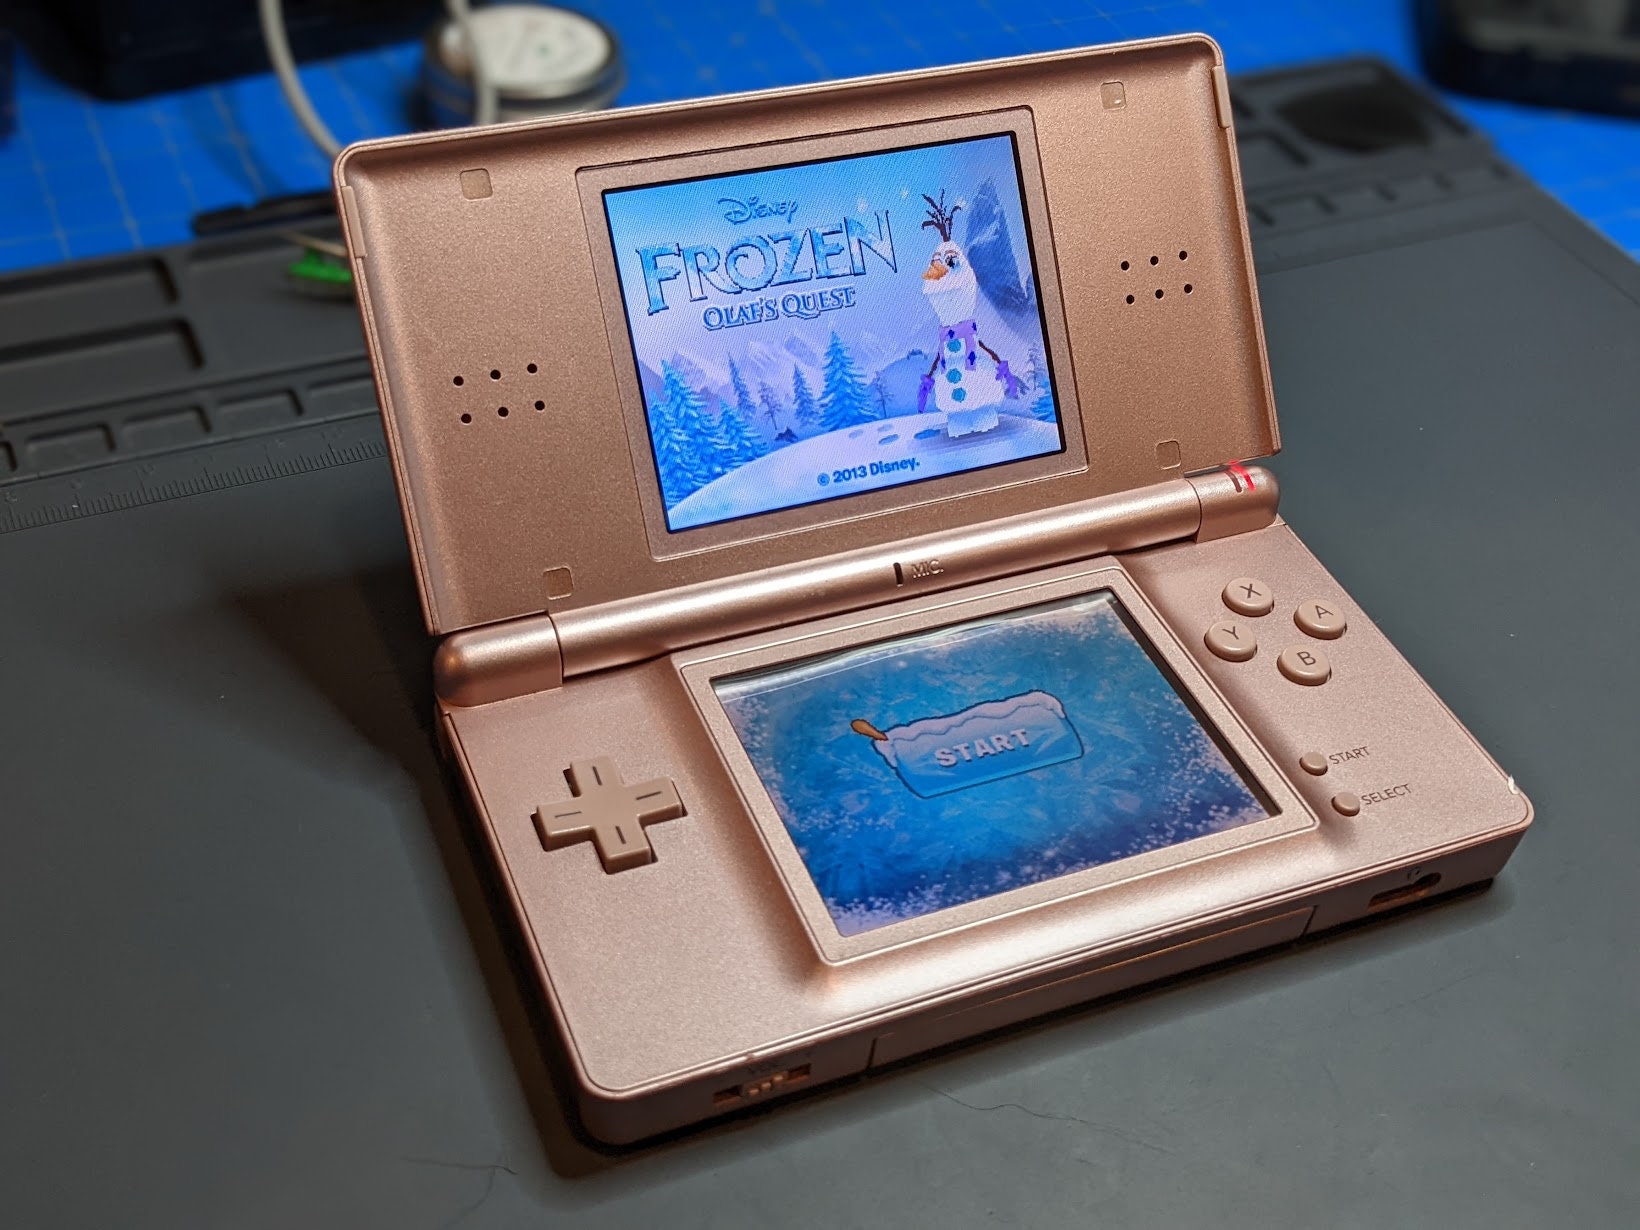 Nintendo DSi XL Display – Rose Colored Gaming